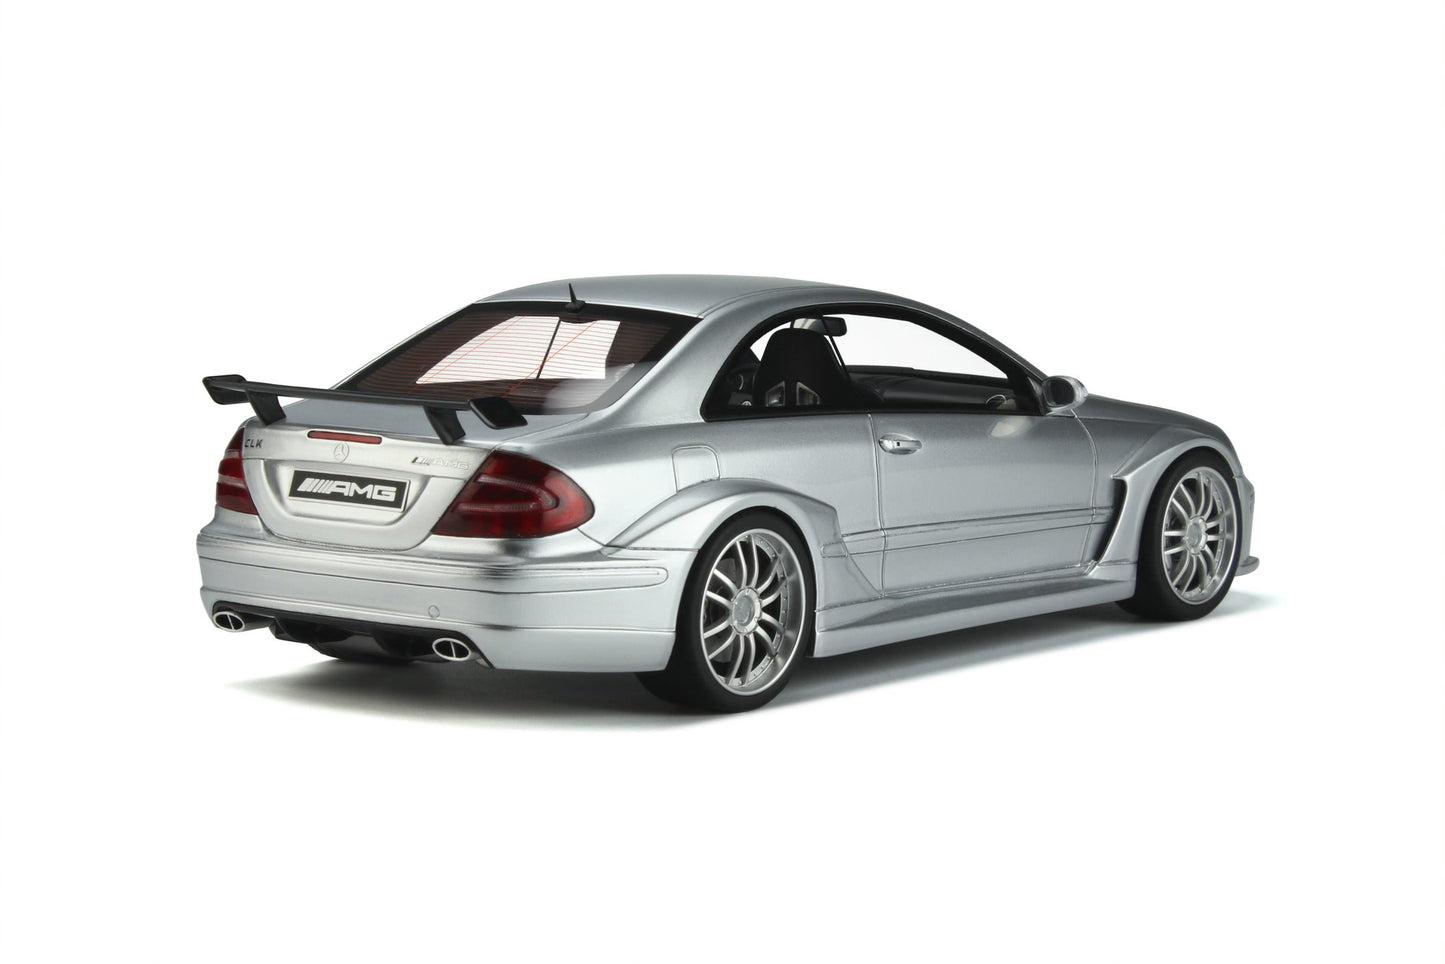 1:18 Mercedes-Benz CLK DTM, C209, 2004, sølvmetallic, Ottomobile, OT895, lukket model, limited 2.500 stk.